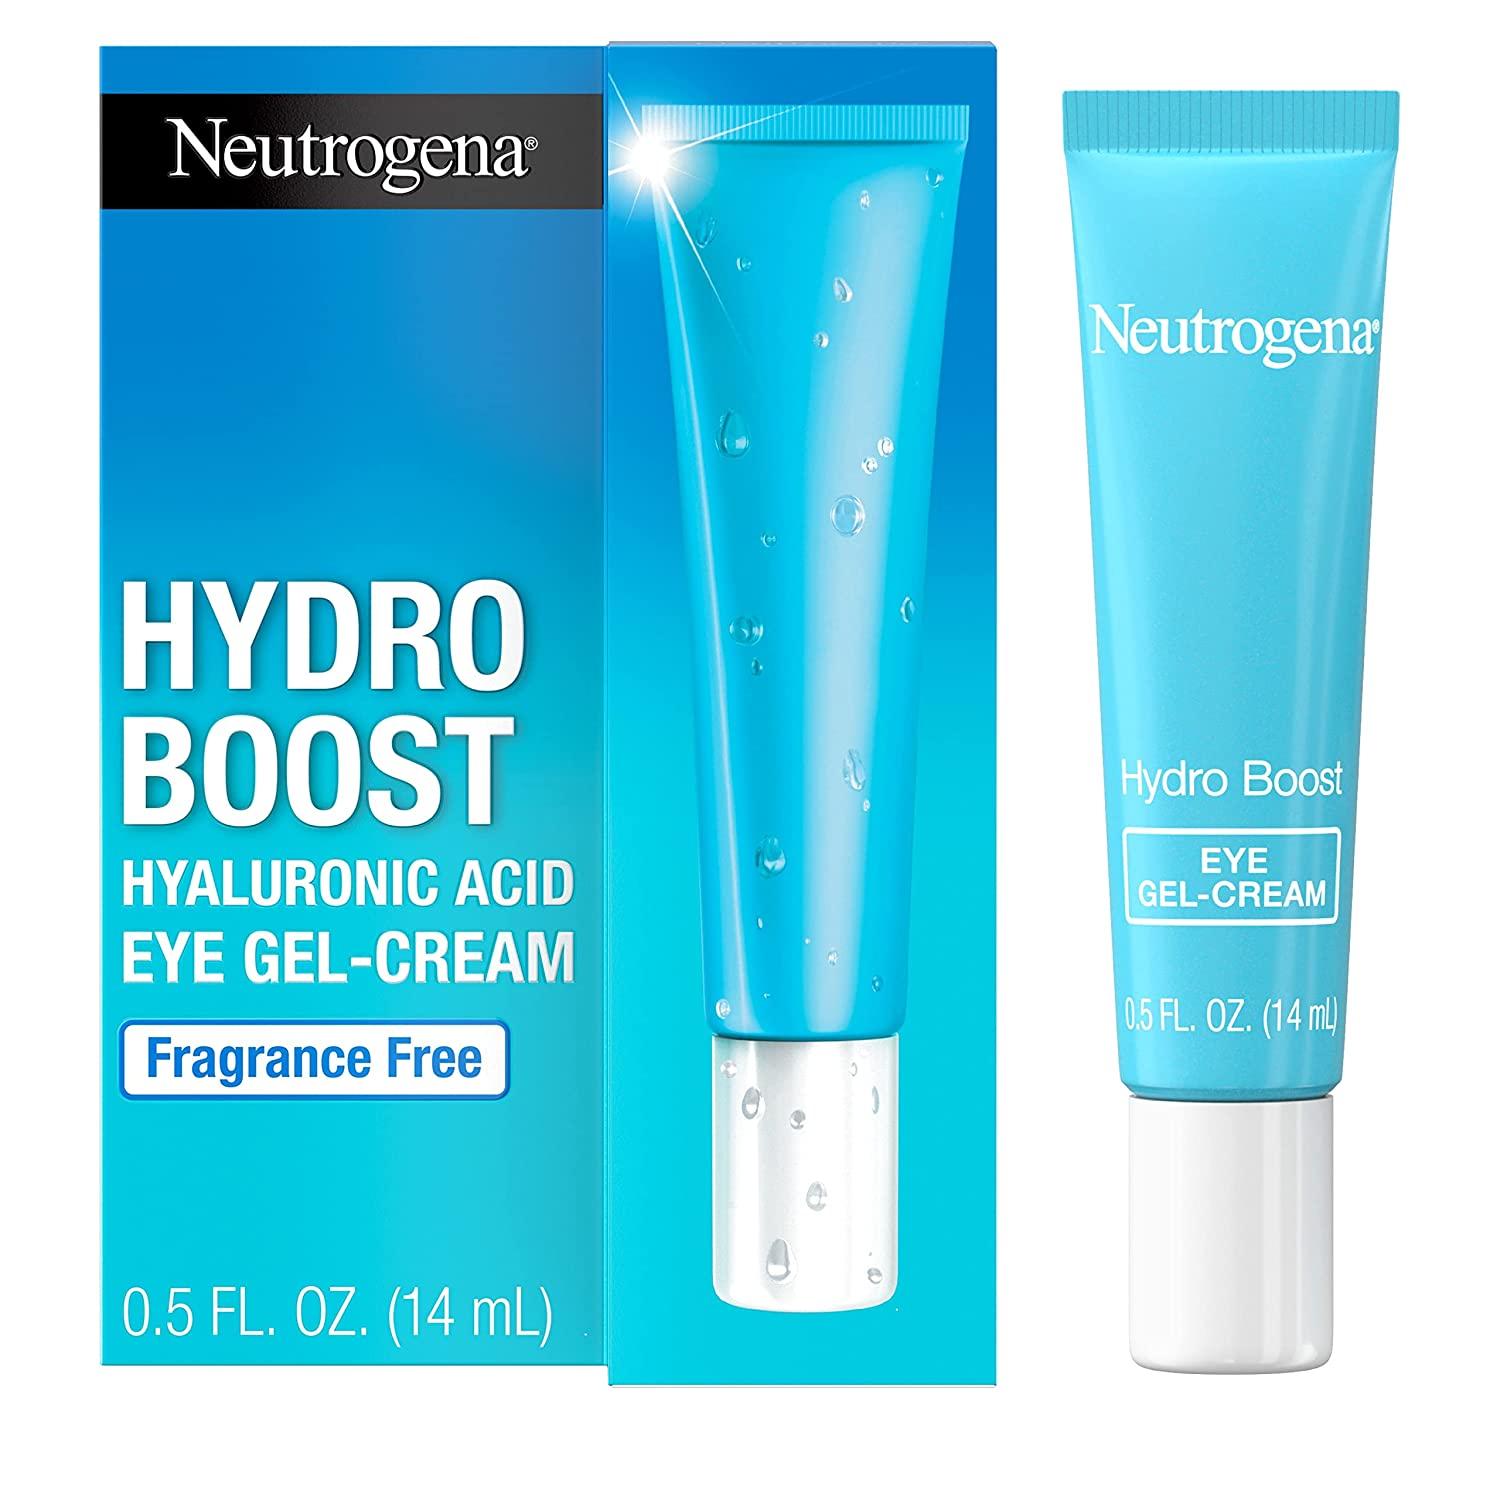 Neutrogena Hydro Boost Under Eye Cream for $9.02 Shipped